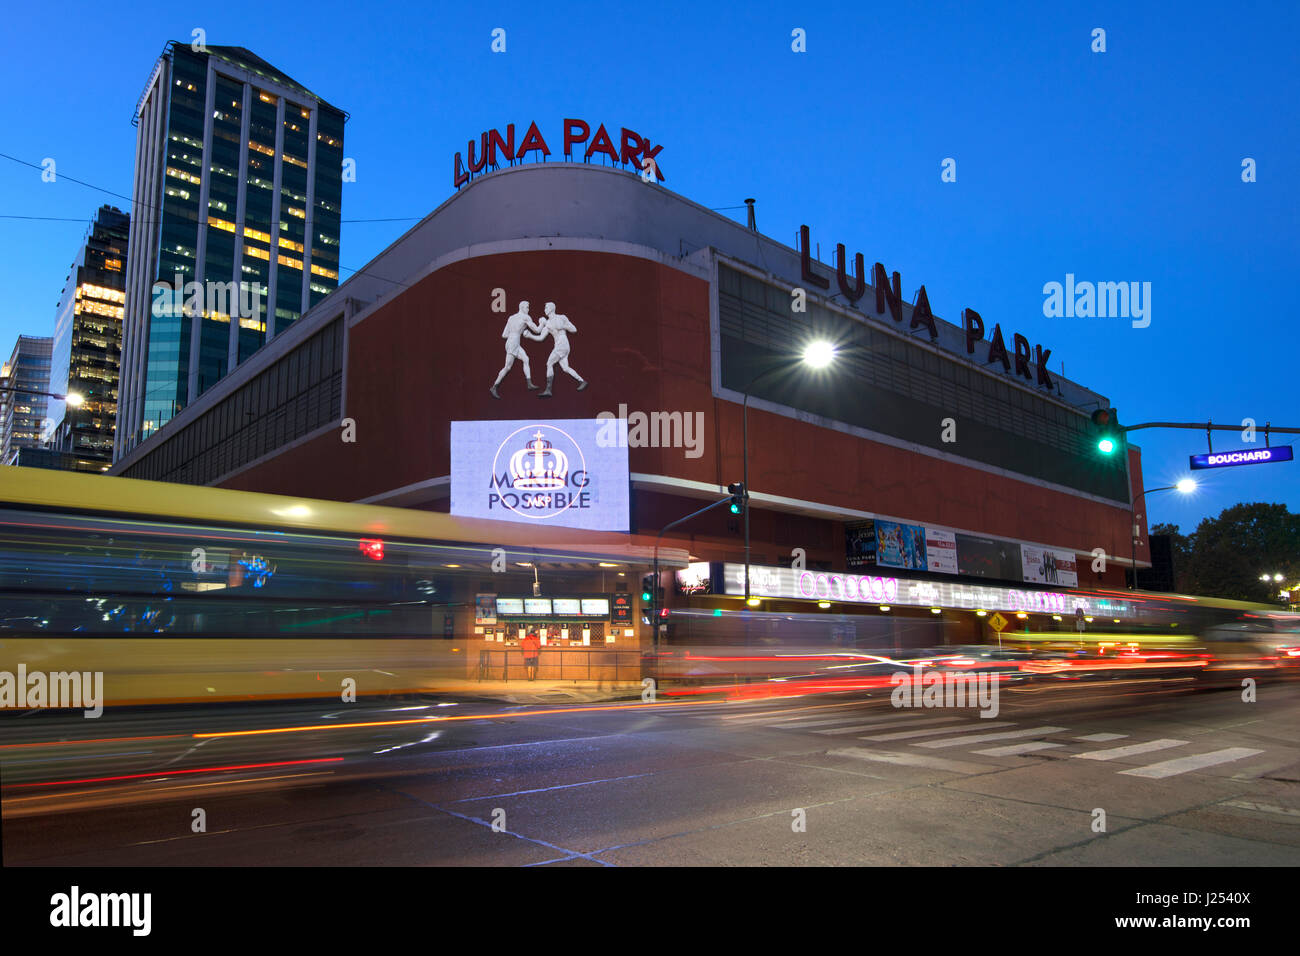 The "Luna Park" stadium after sunset. San Nicolás, Buenos Aires, Argentina  Stock Photo - Alamy